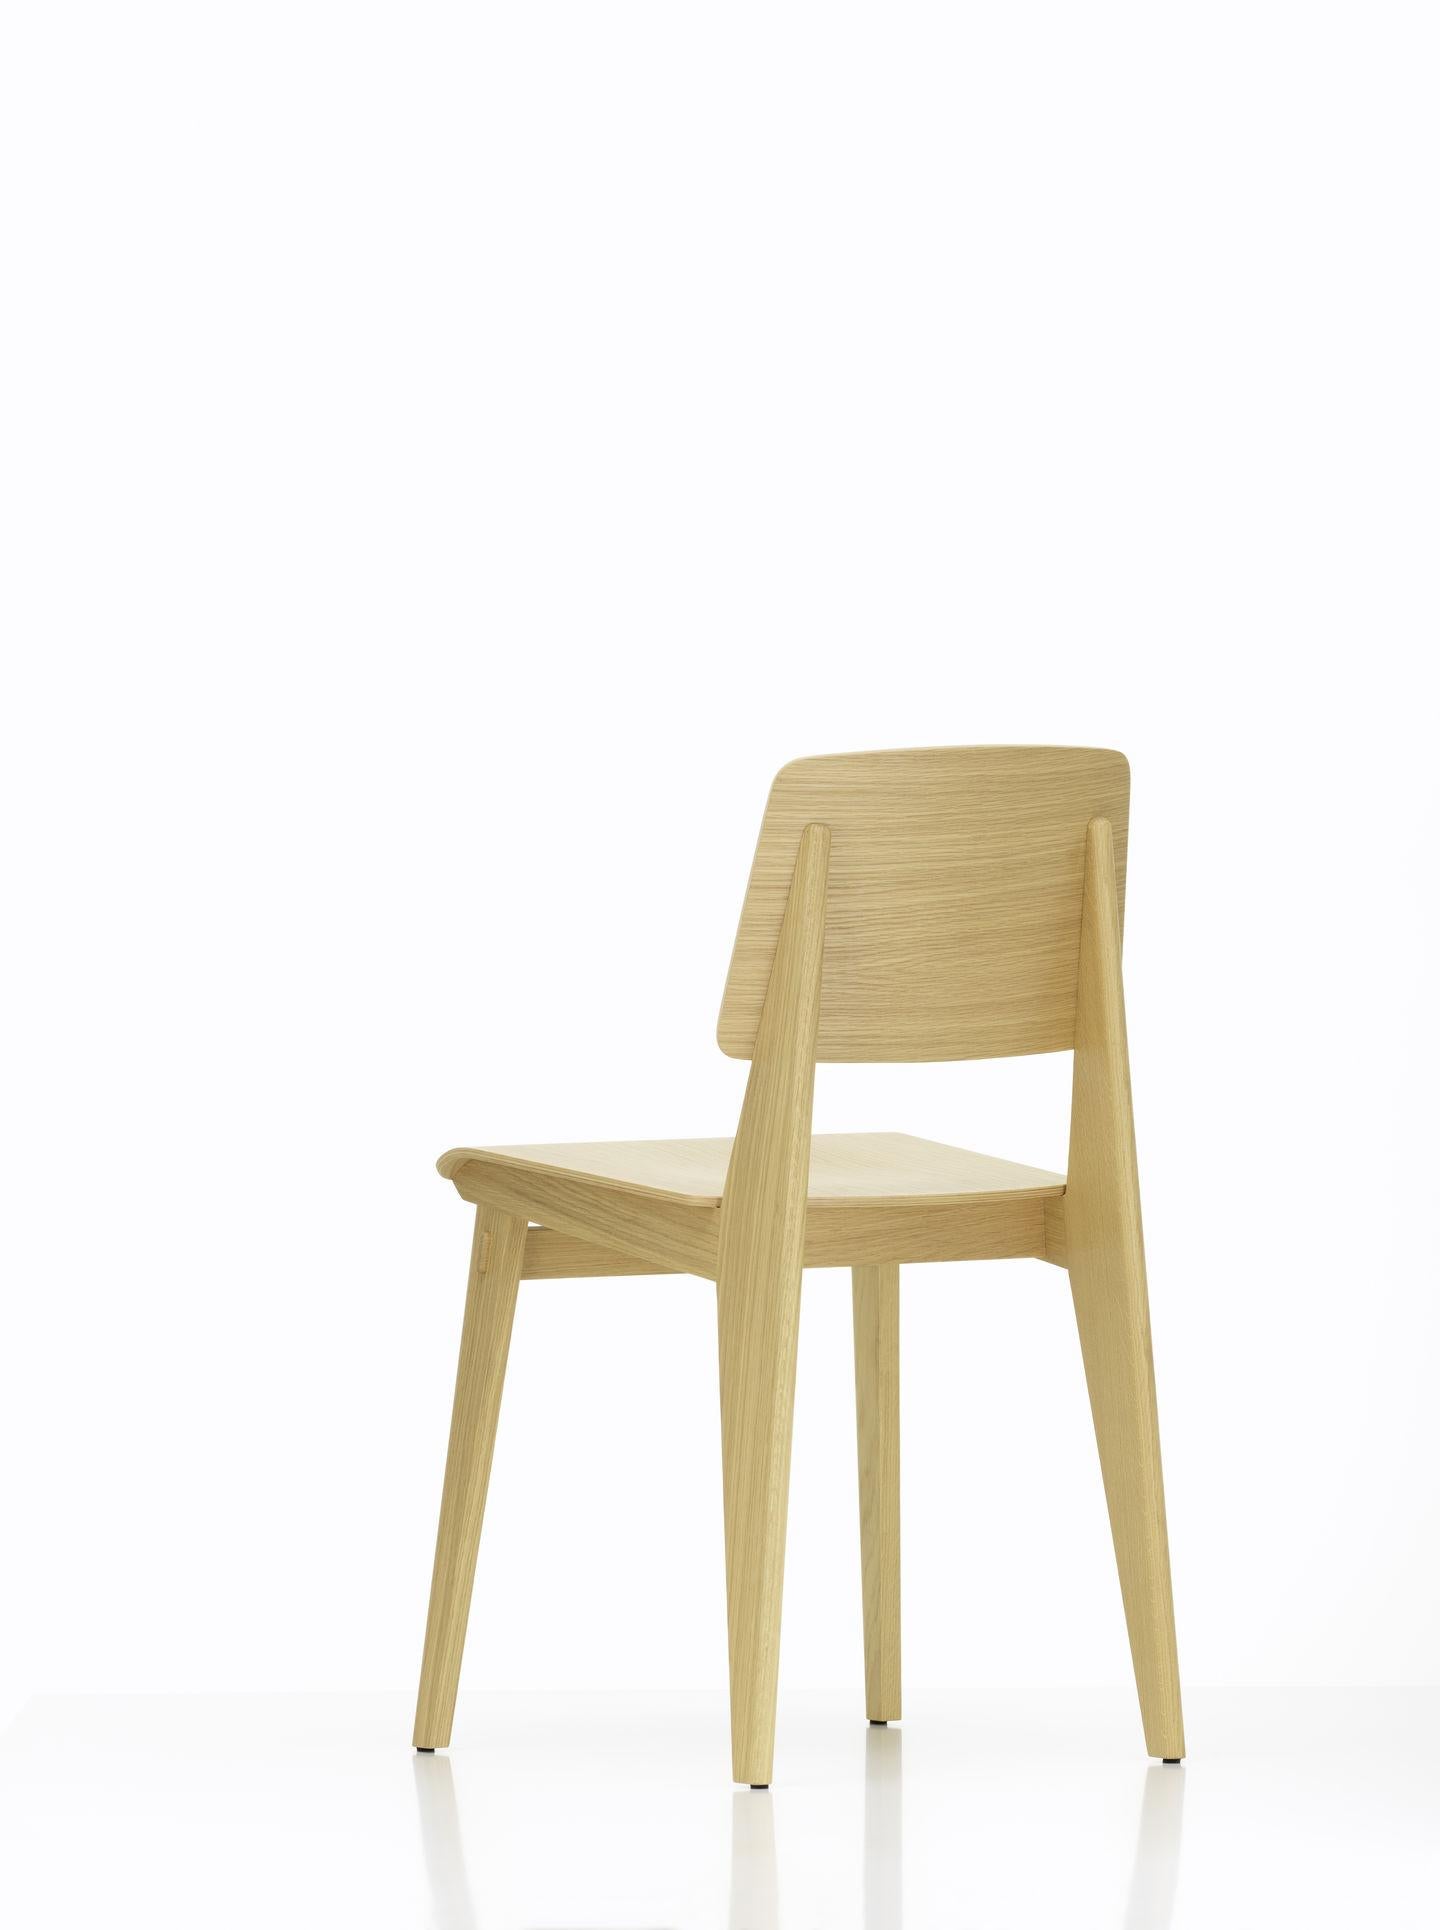 Jean Prouvé Light Oak Chaise Tout Bois Chair by Vitra 5